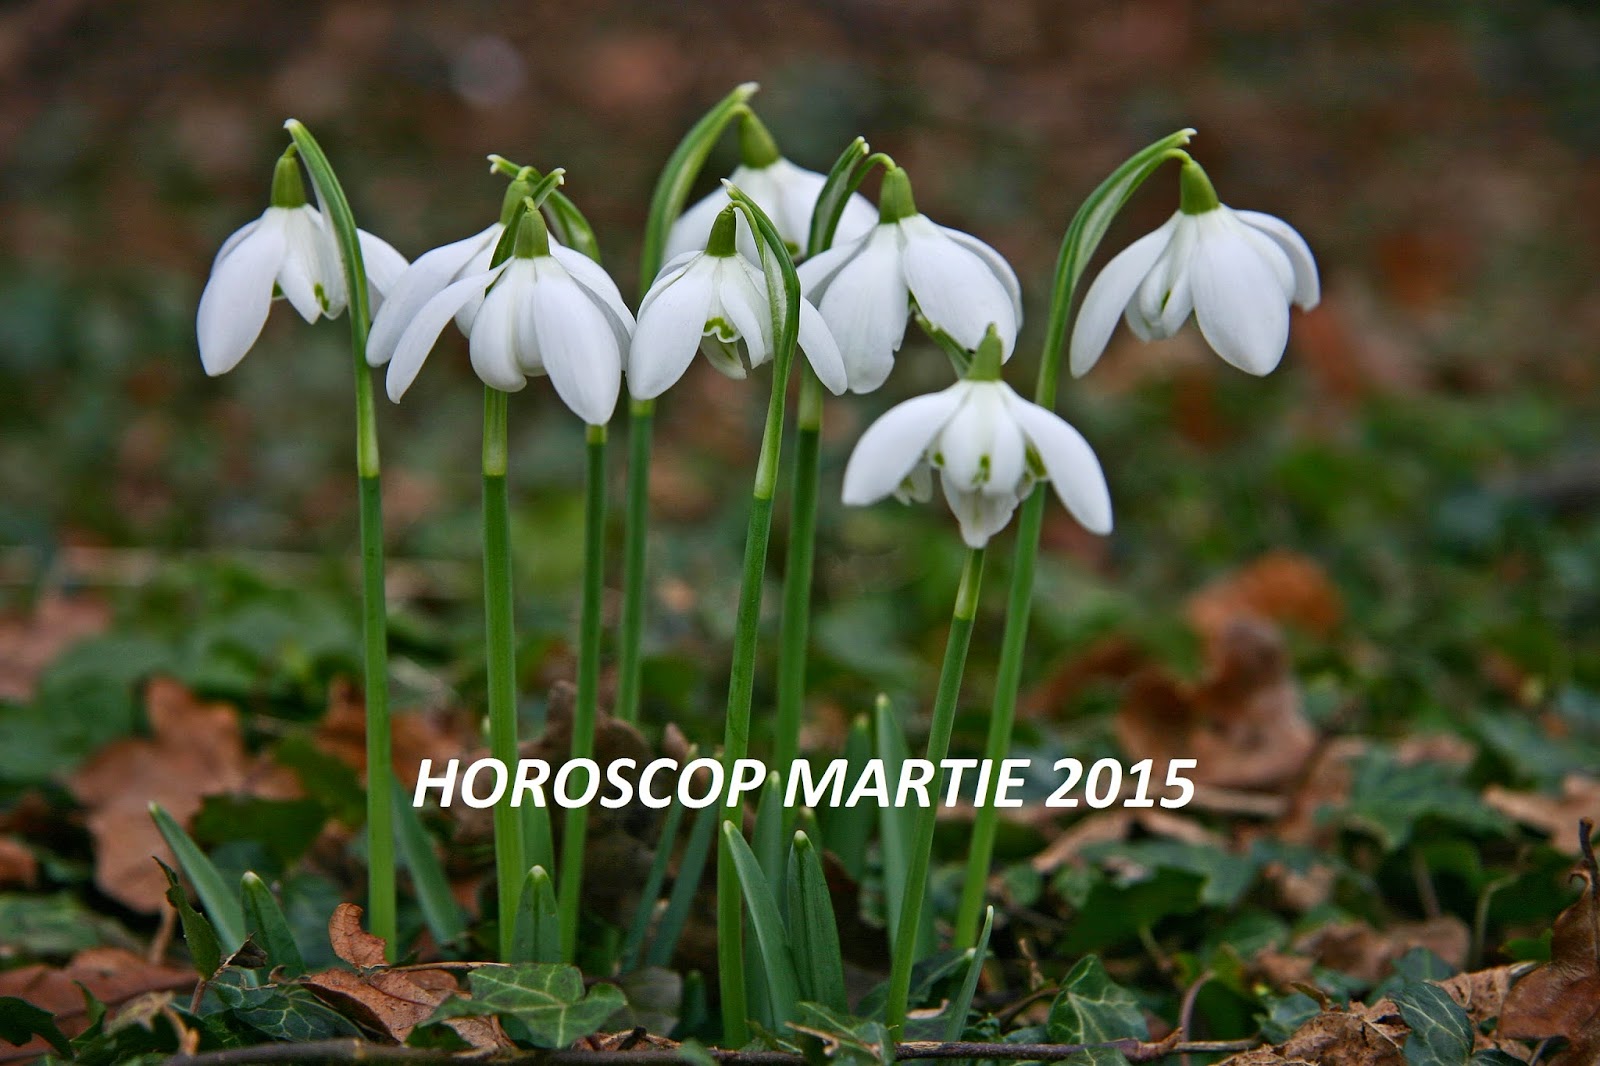 Horoscop martie 2015 - Toate zodiile